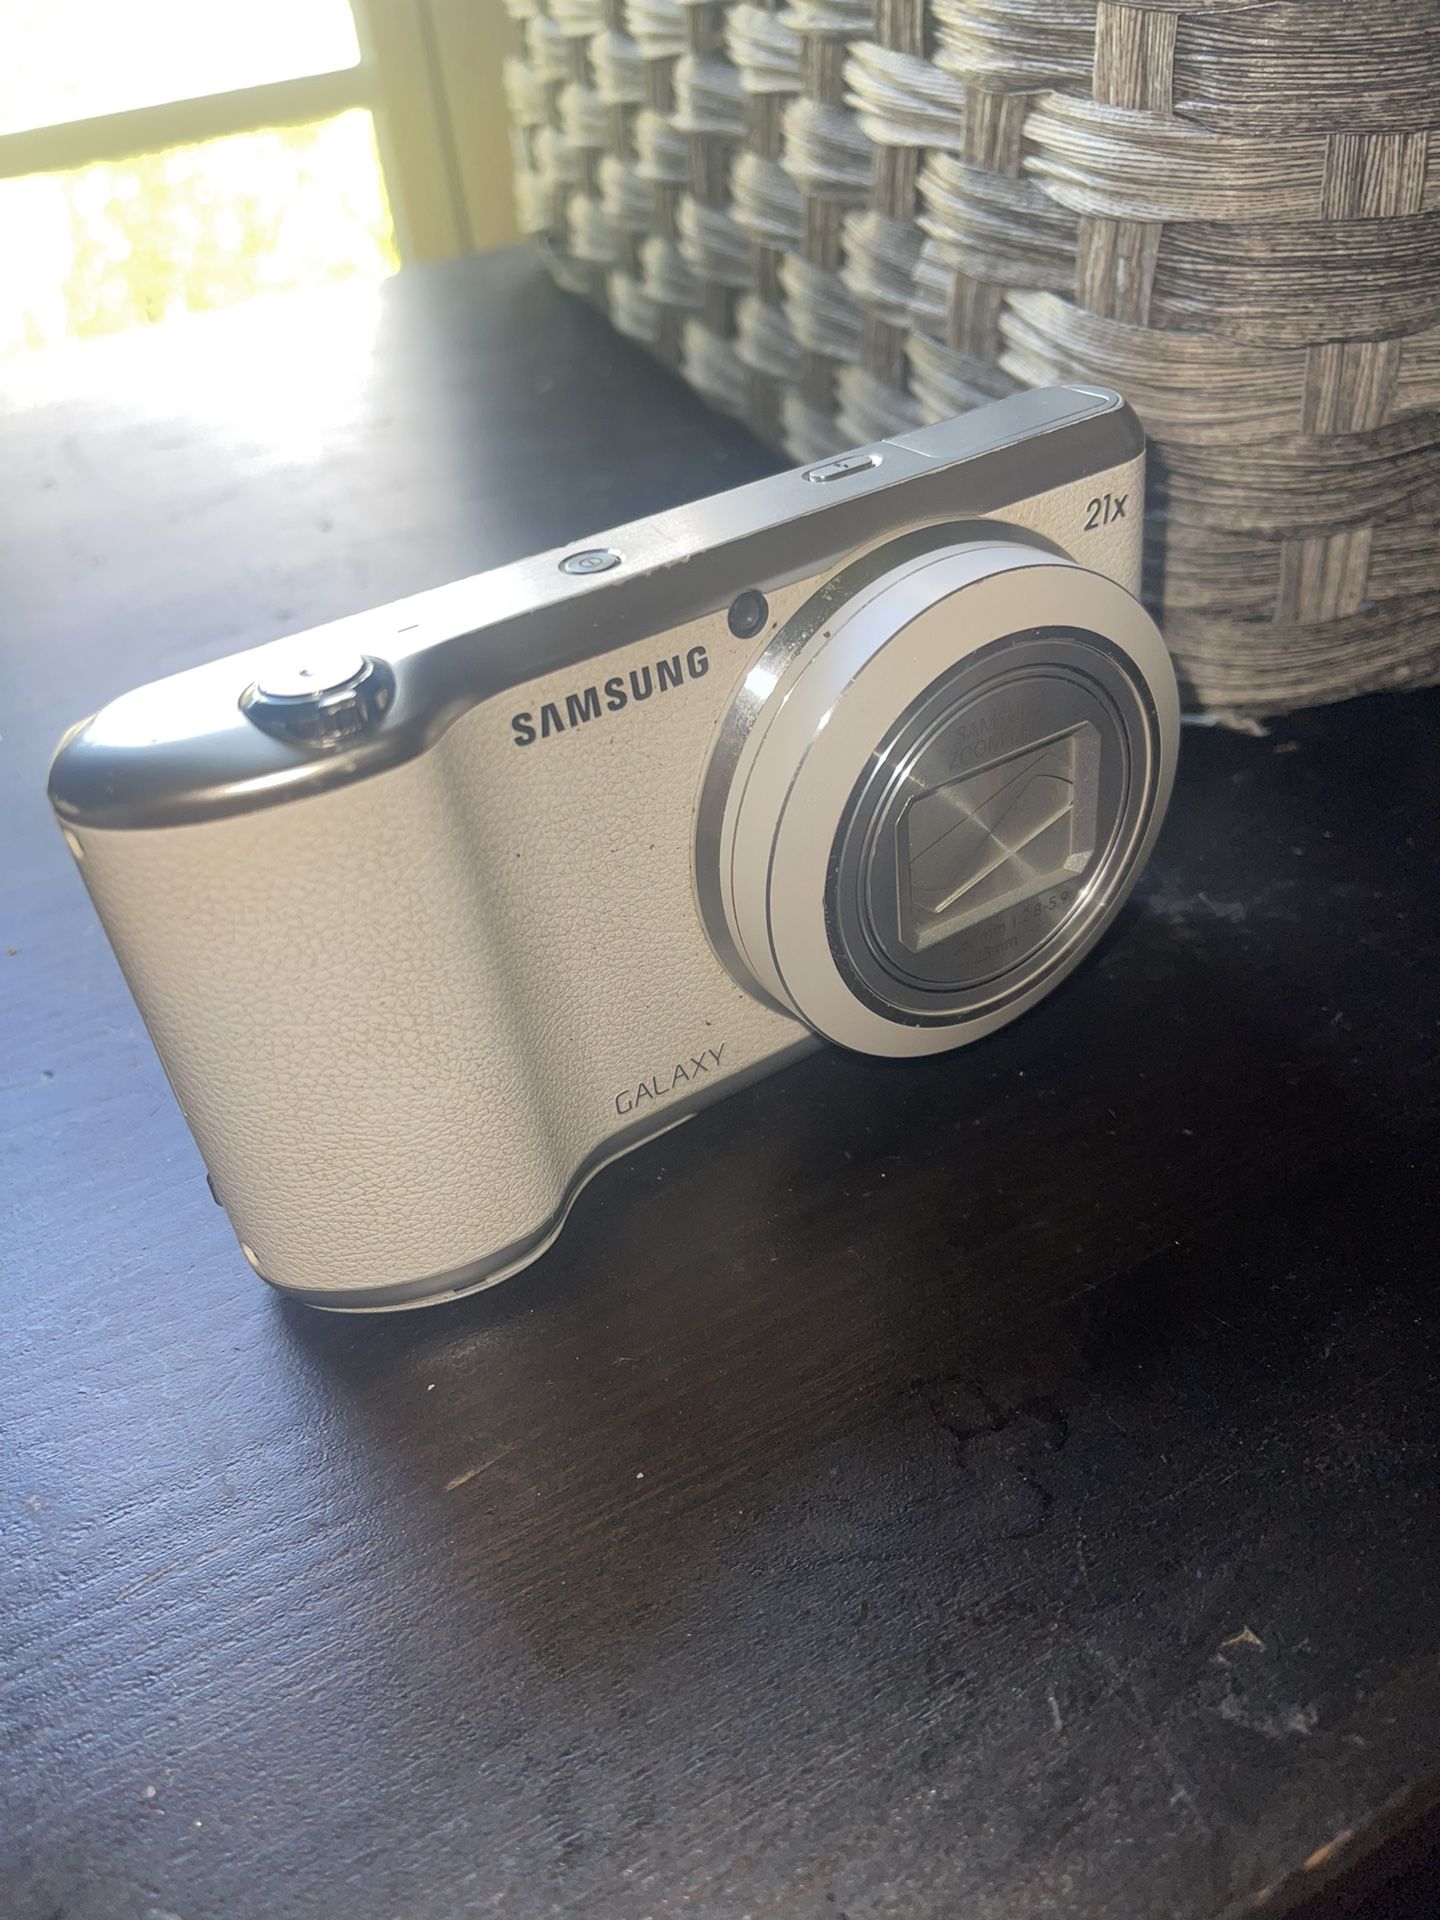 Samsung Galaxy Camera 